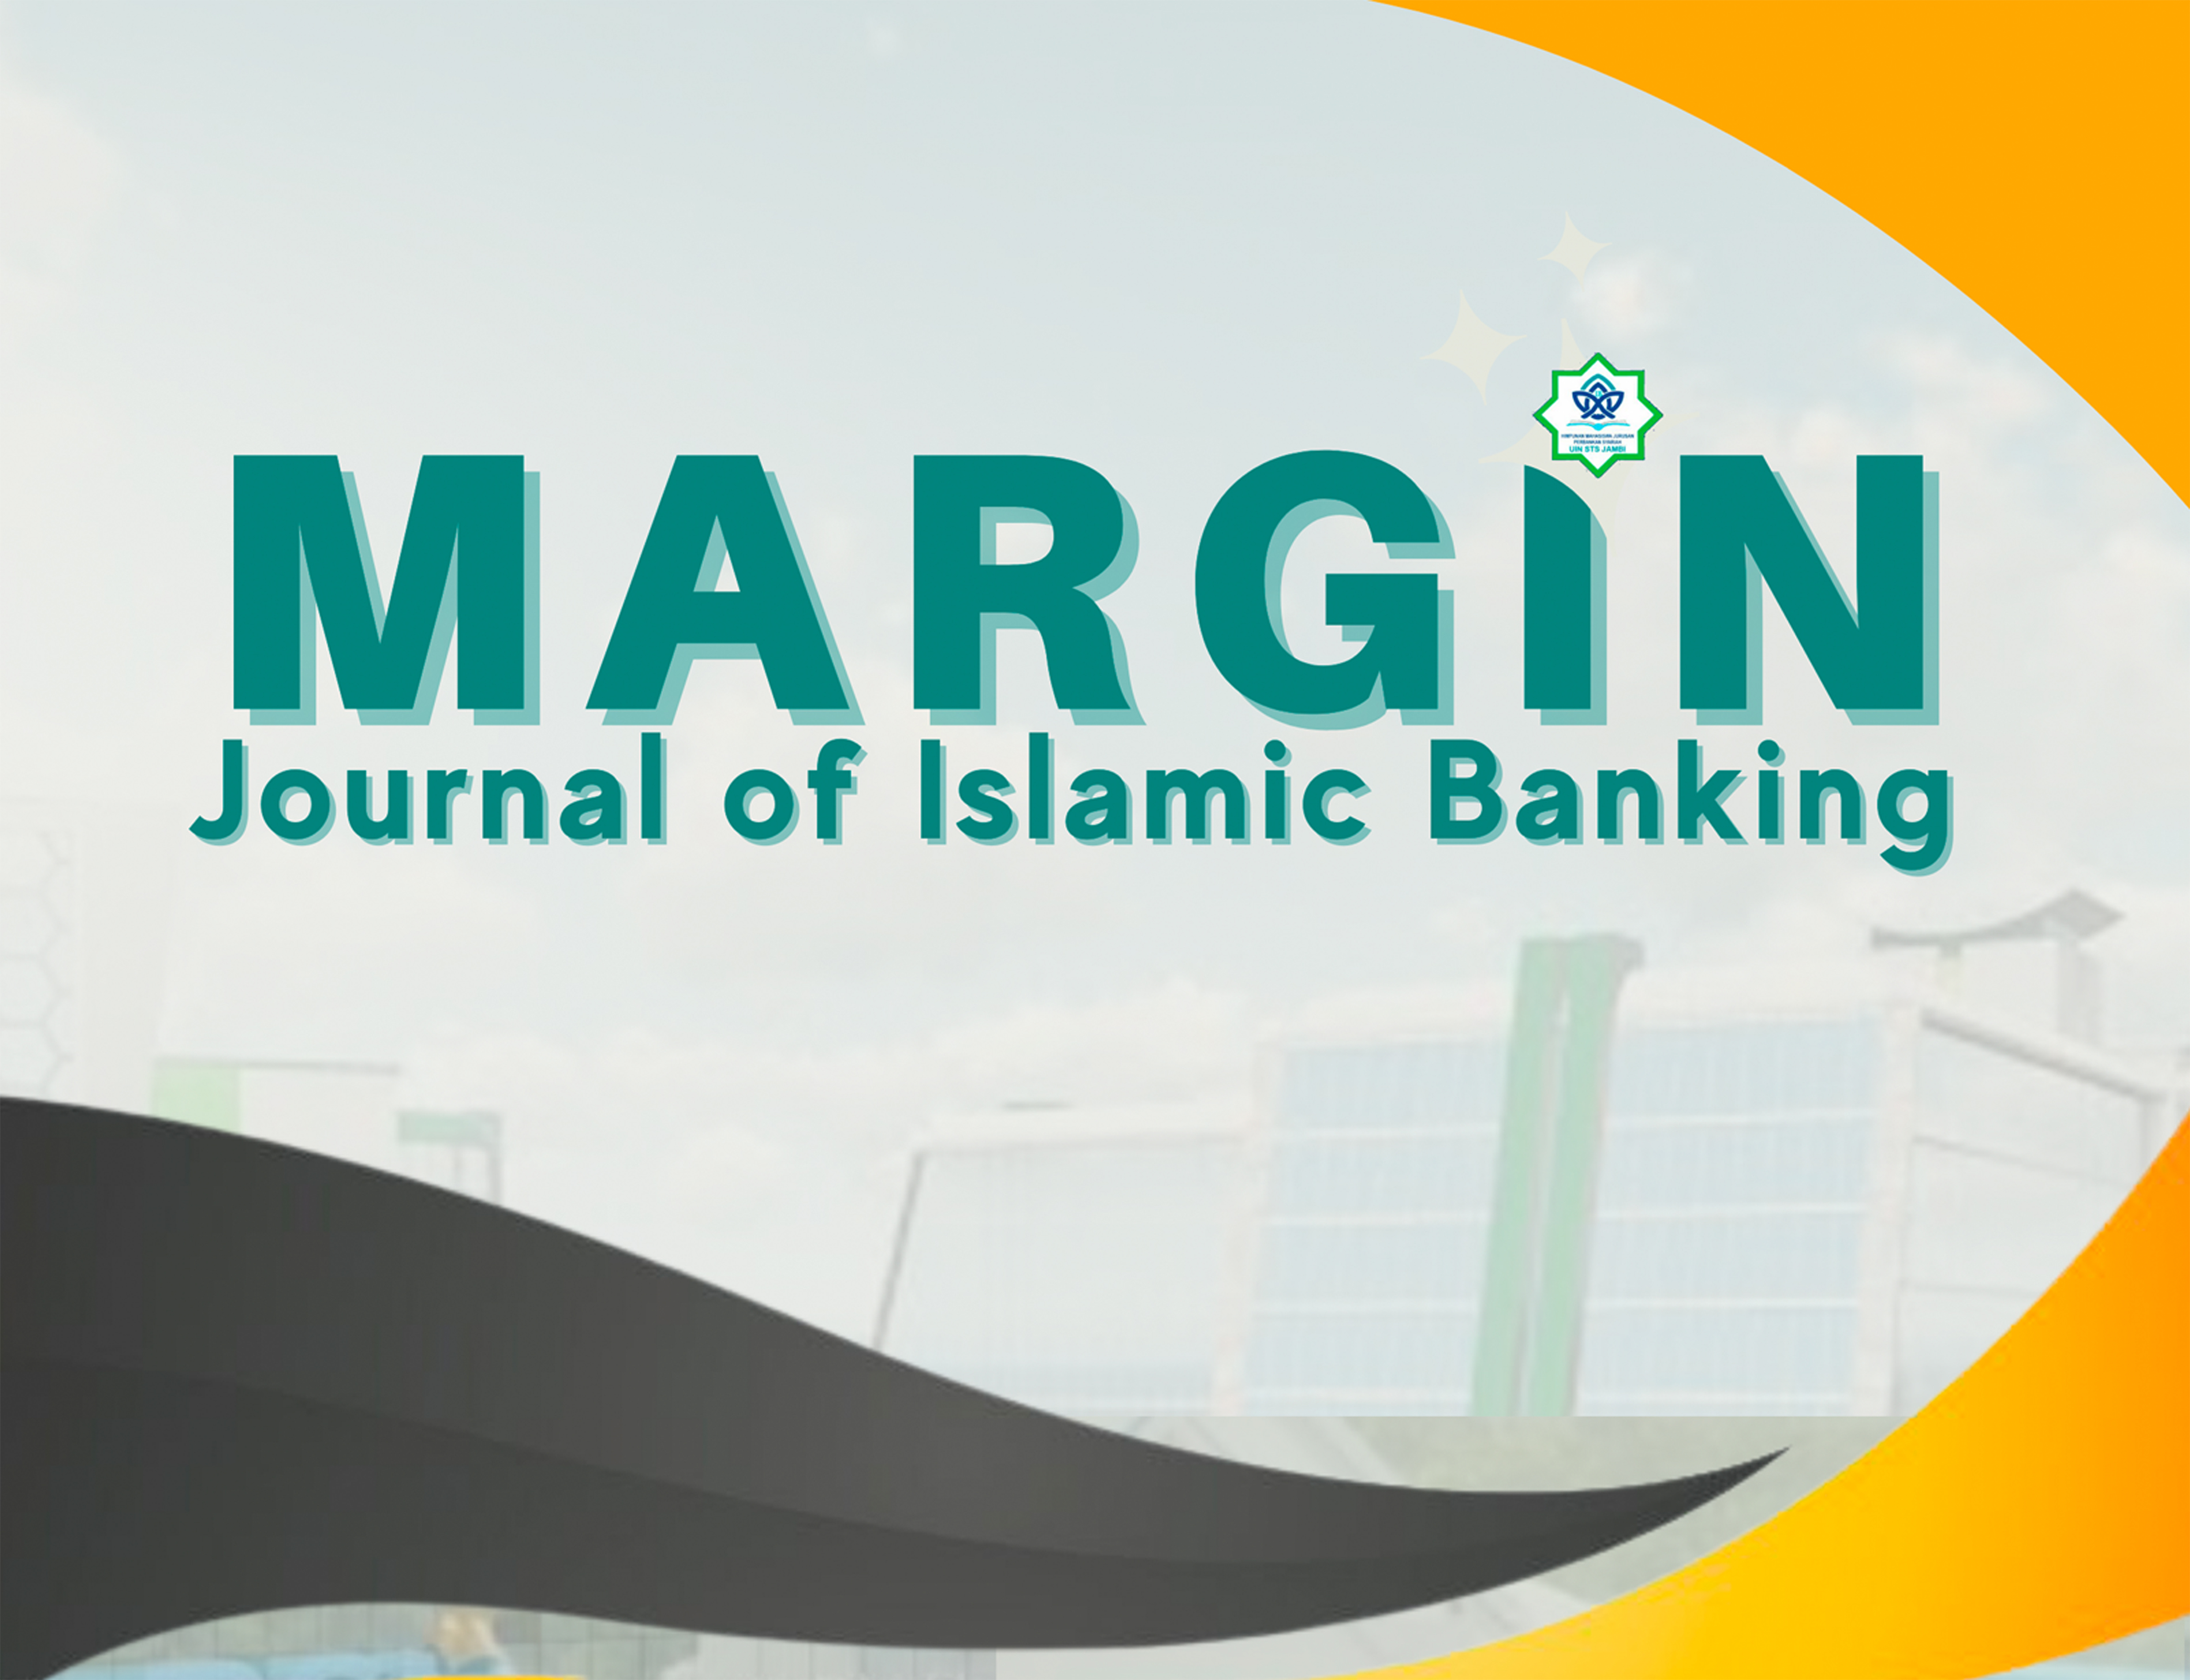 MARGIN: JUOURNAL OF ISLAMIC BANKING